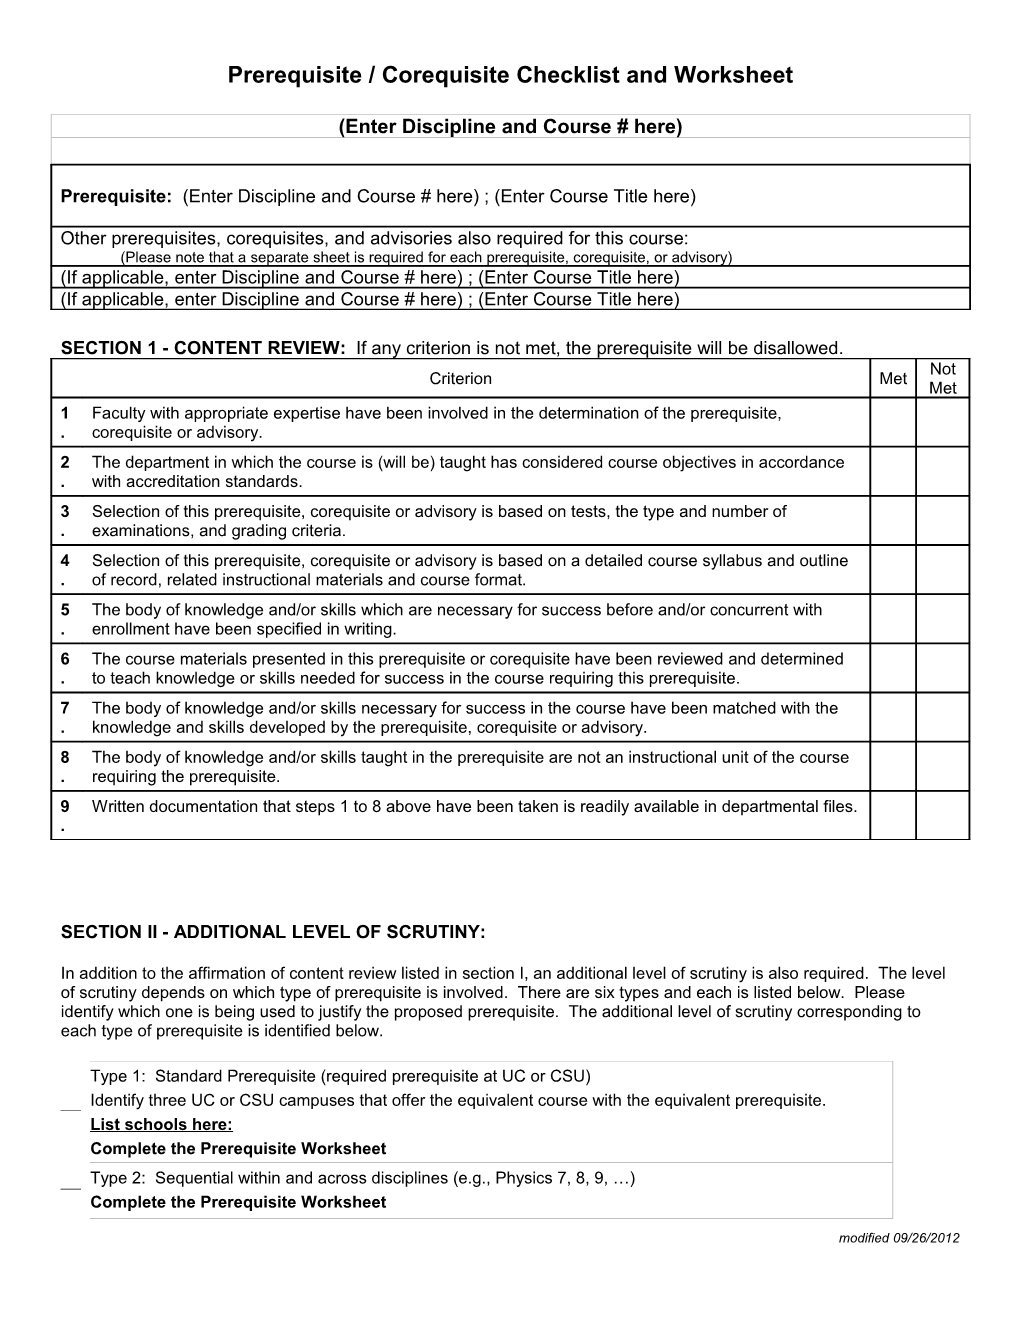 Prerequisite Form Updated 3 21 12